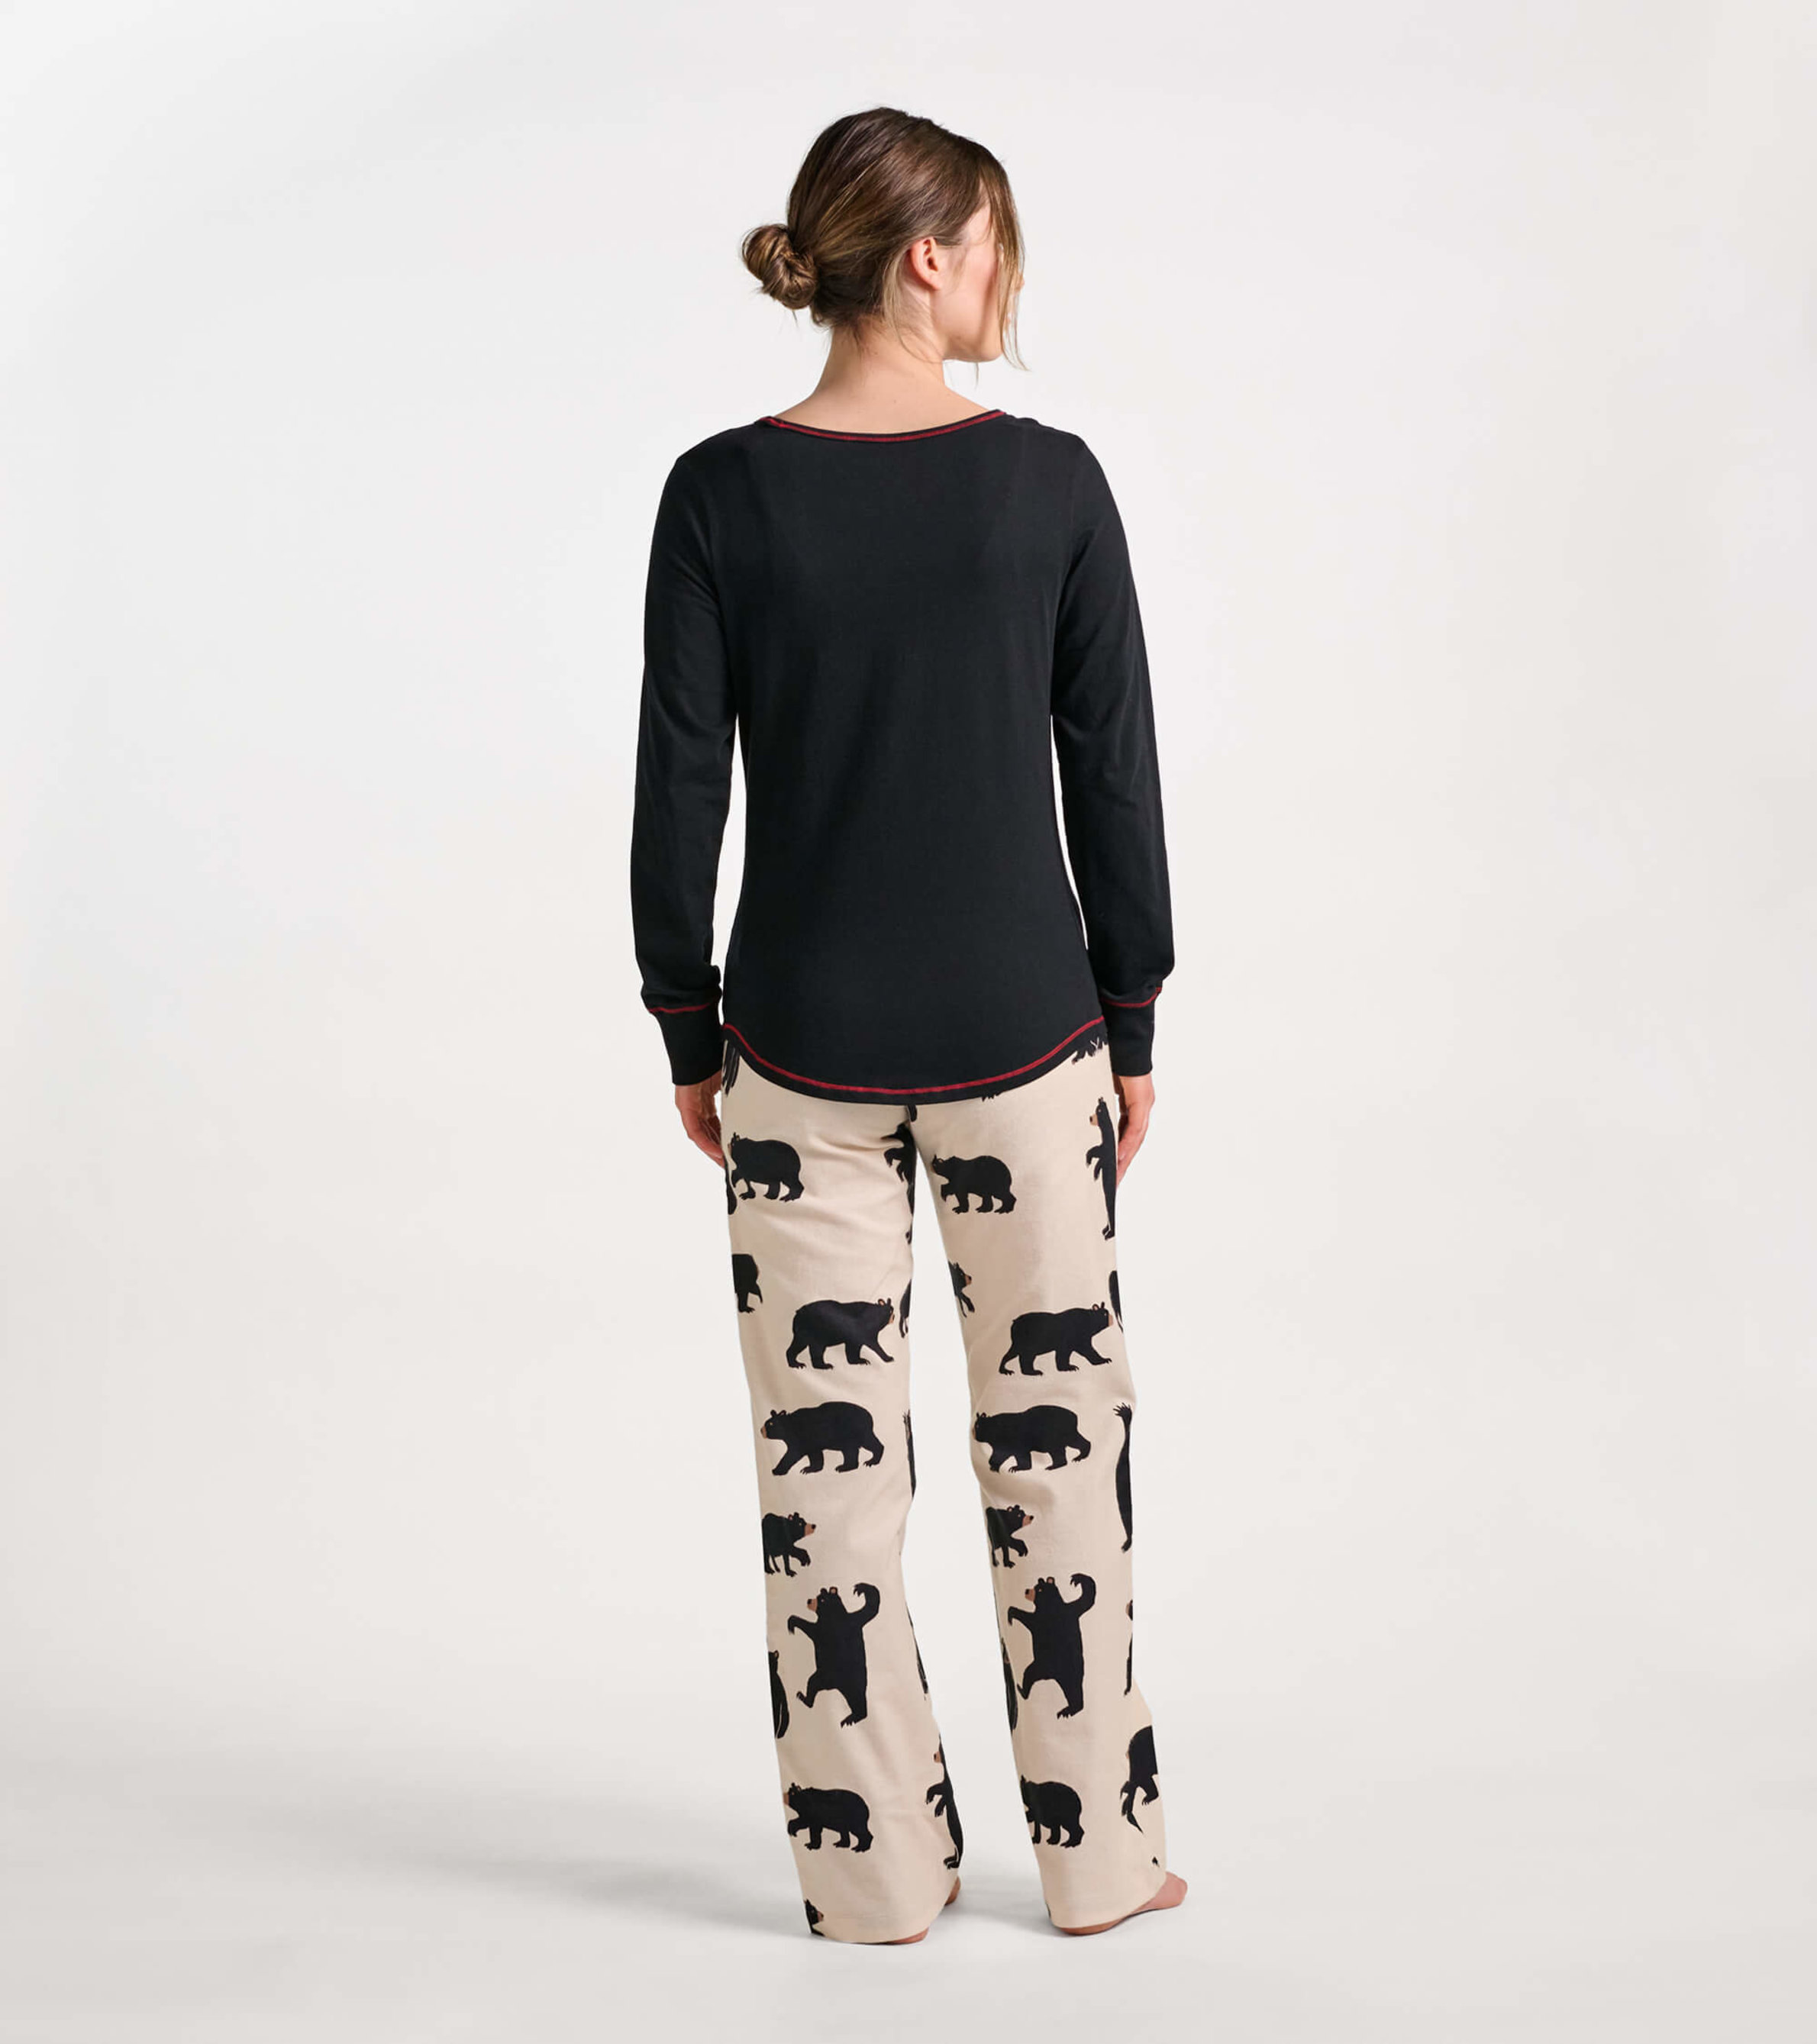 Just Love 100% Cotton Jersey Women Plaid Pajama Pants Sleepwear (Solid  Black, Small) 